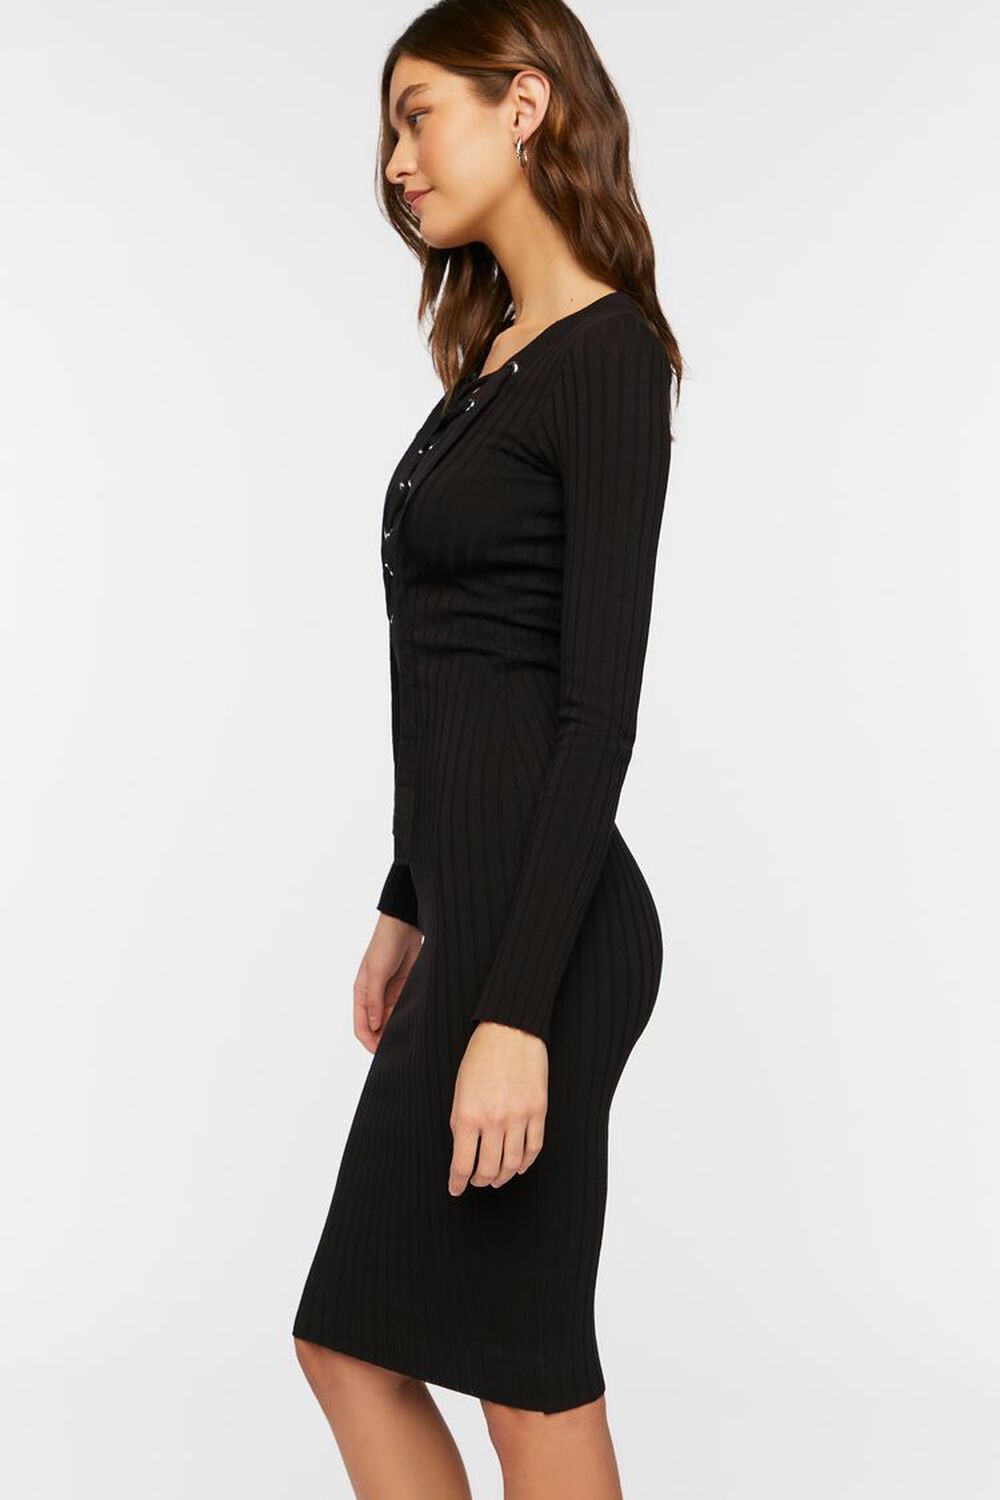 BLACK Lace-Up Bodycon Midi Dress, image 3